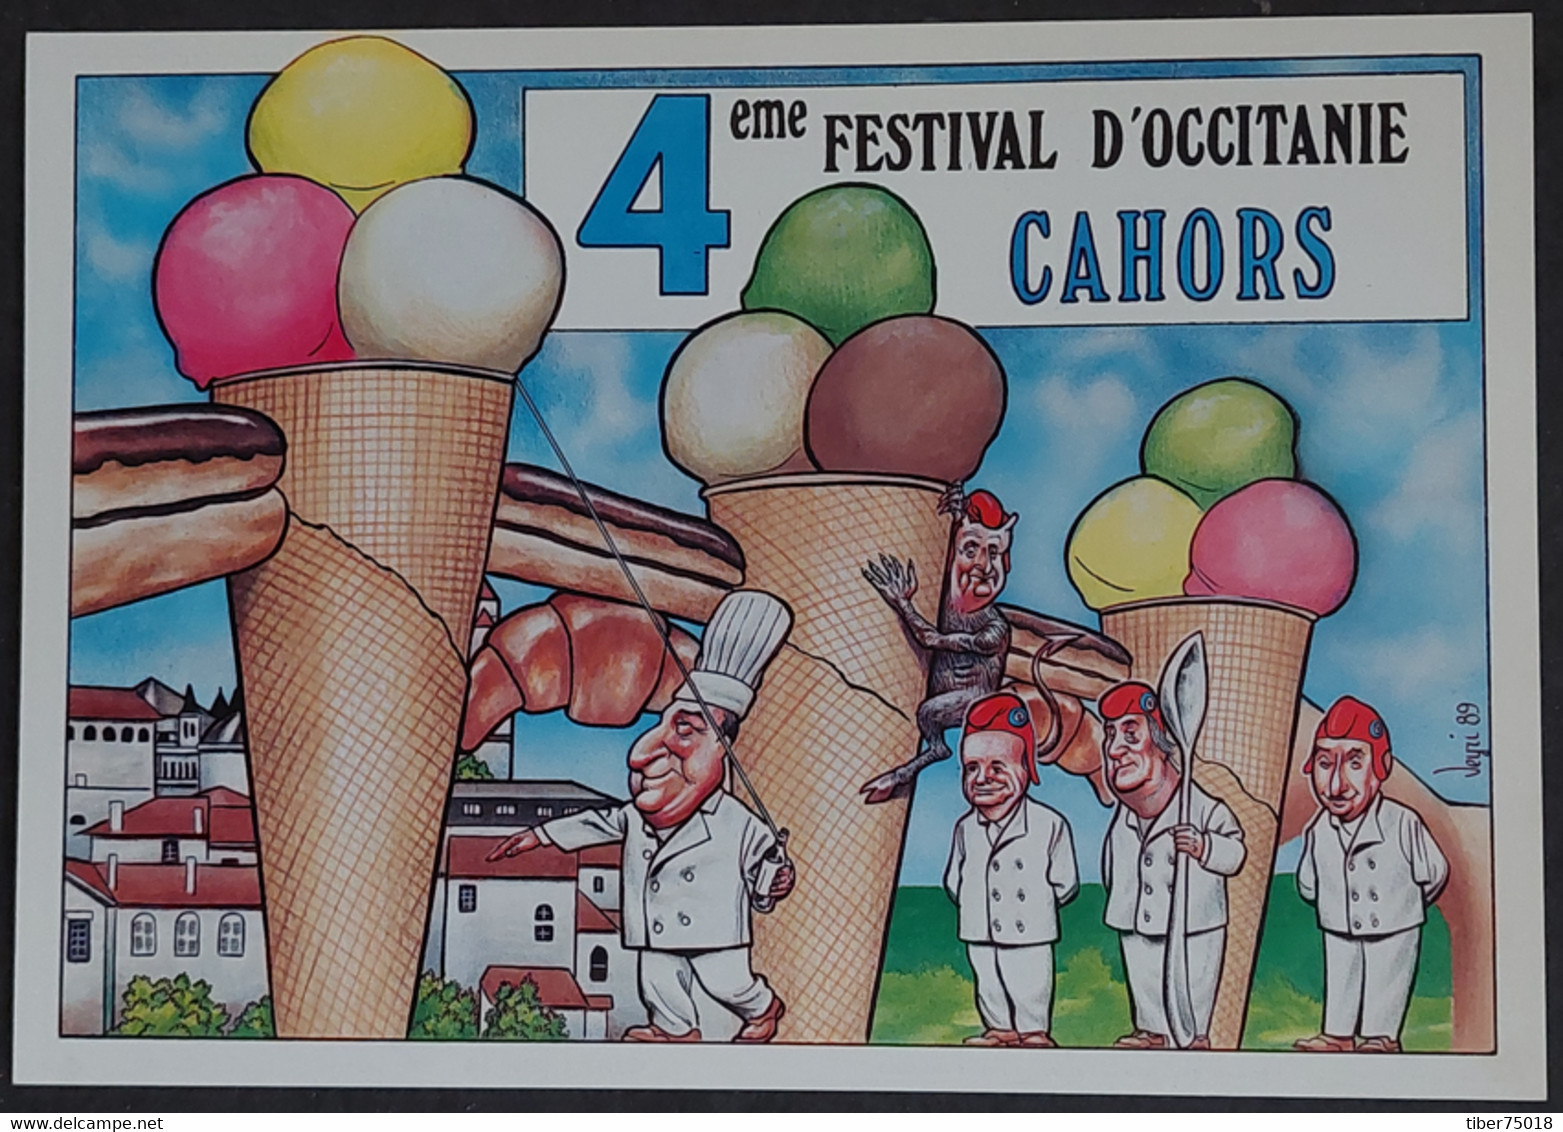 Carte Postale - 4eme Festival D'Occitanie (Grand Prix Du Dessert - Pont Valentre) Cahors - Illustration : Bernard Veyri - Veyri, Bernard